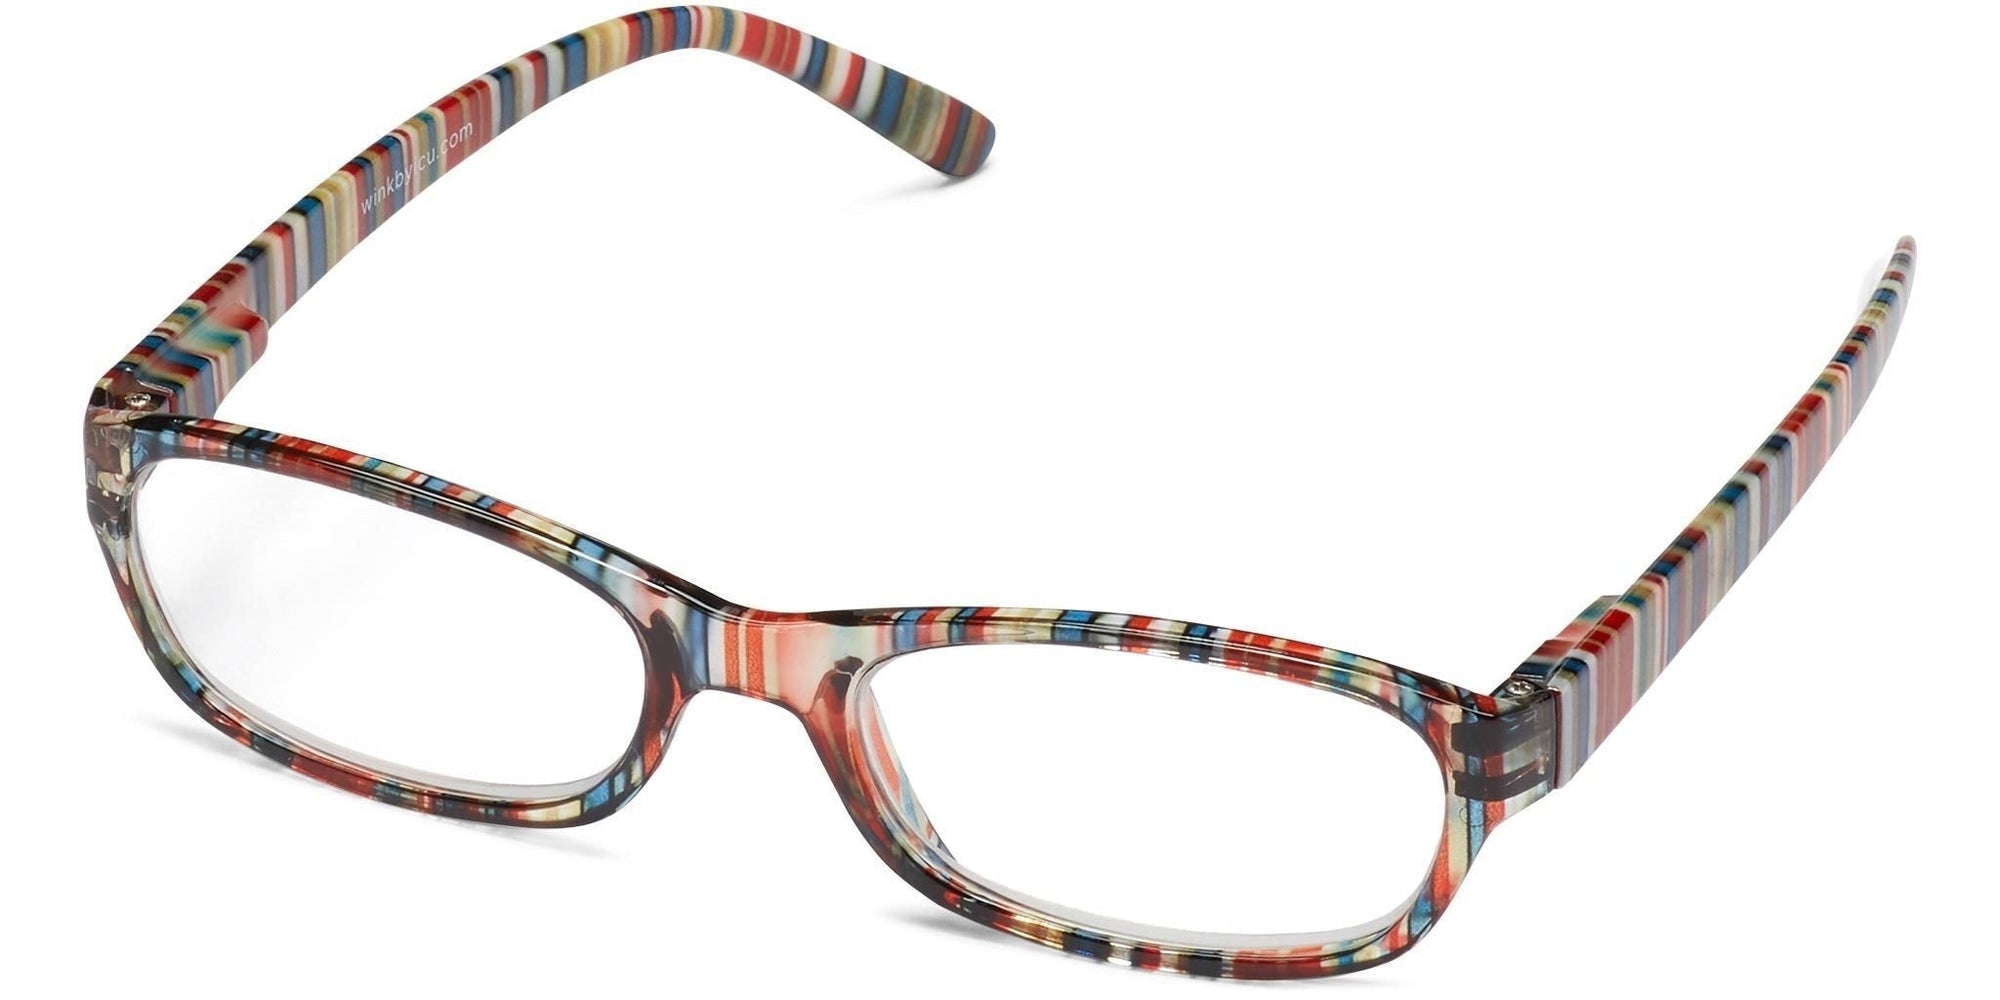 Seaside - Red Multi Stripe / 1.25 - Reading Glasses